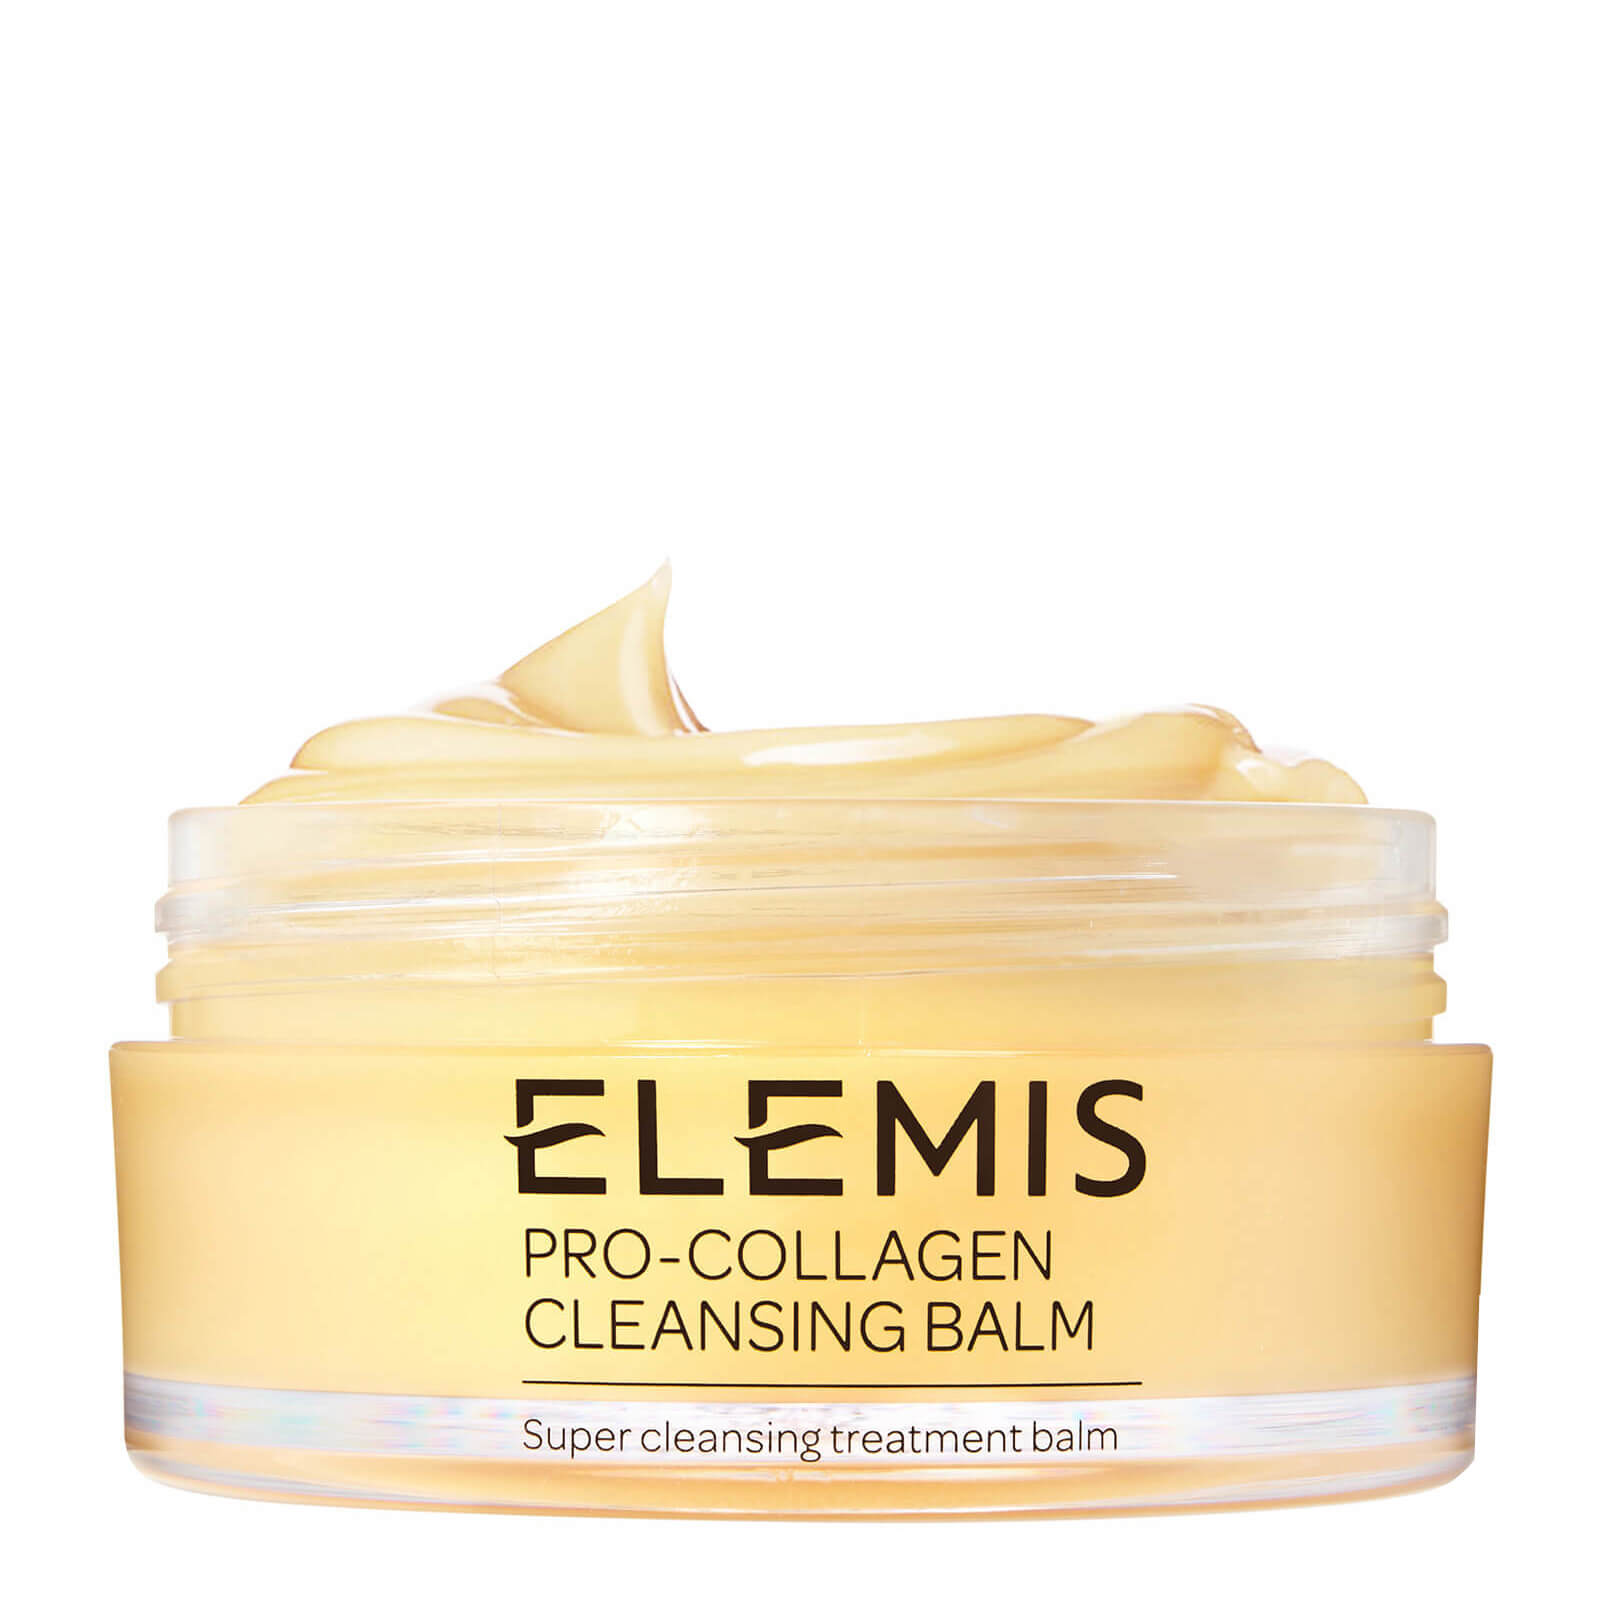 Pro-Collagen Cleansing Balm 100g